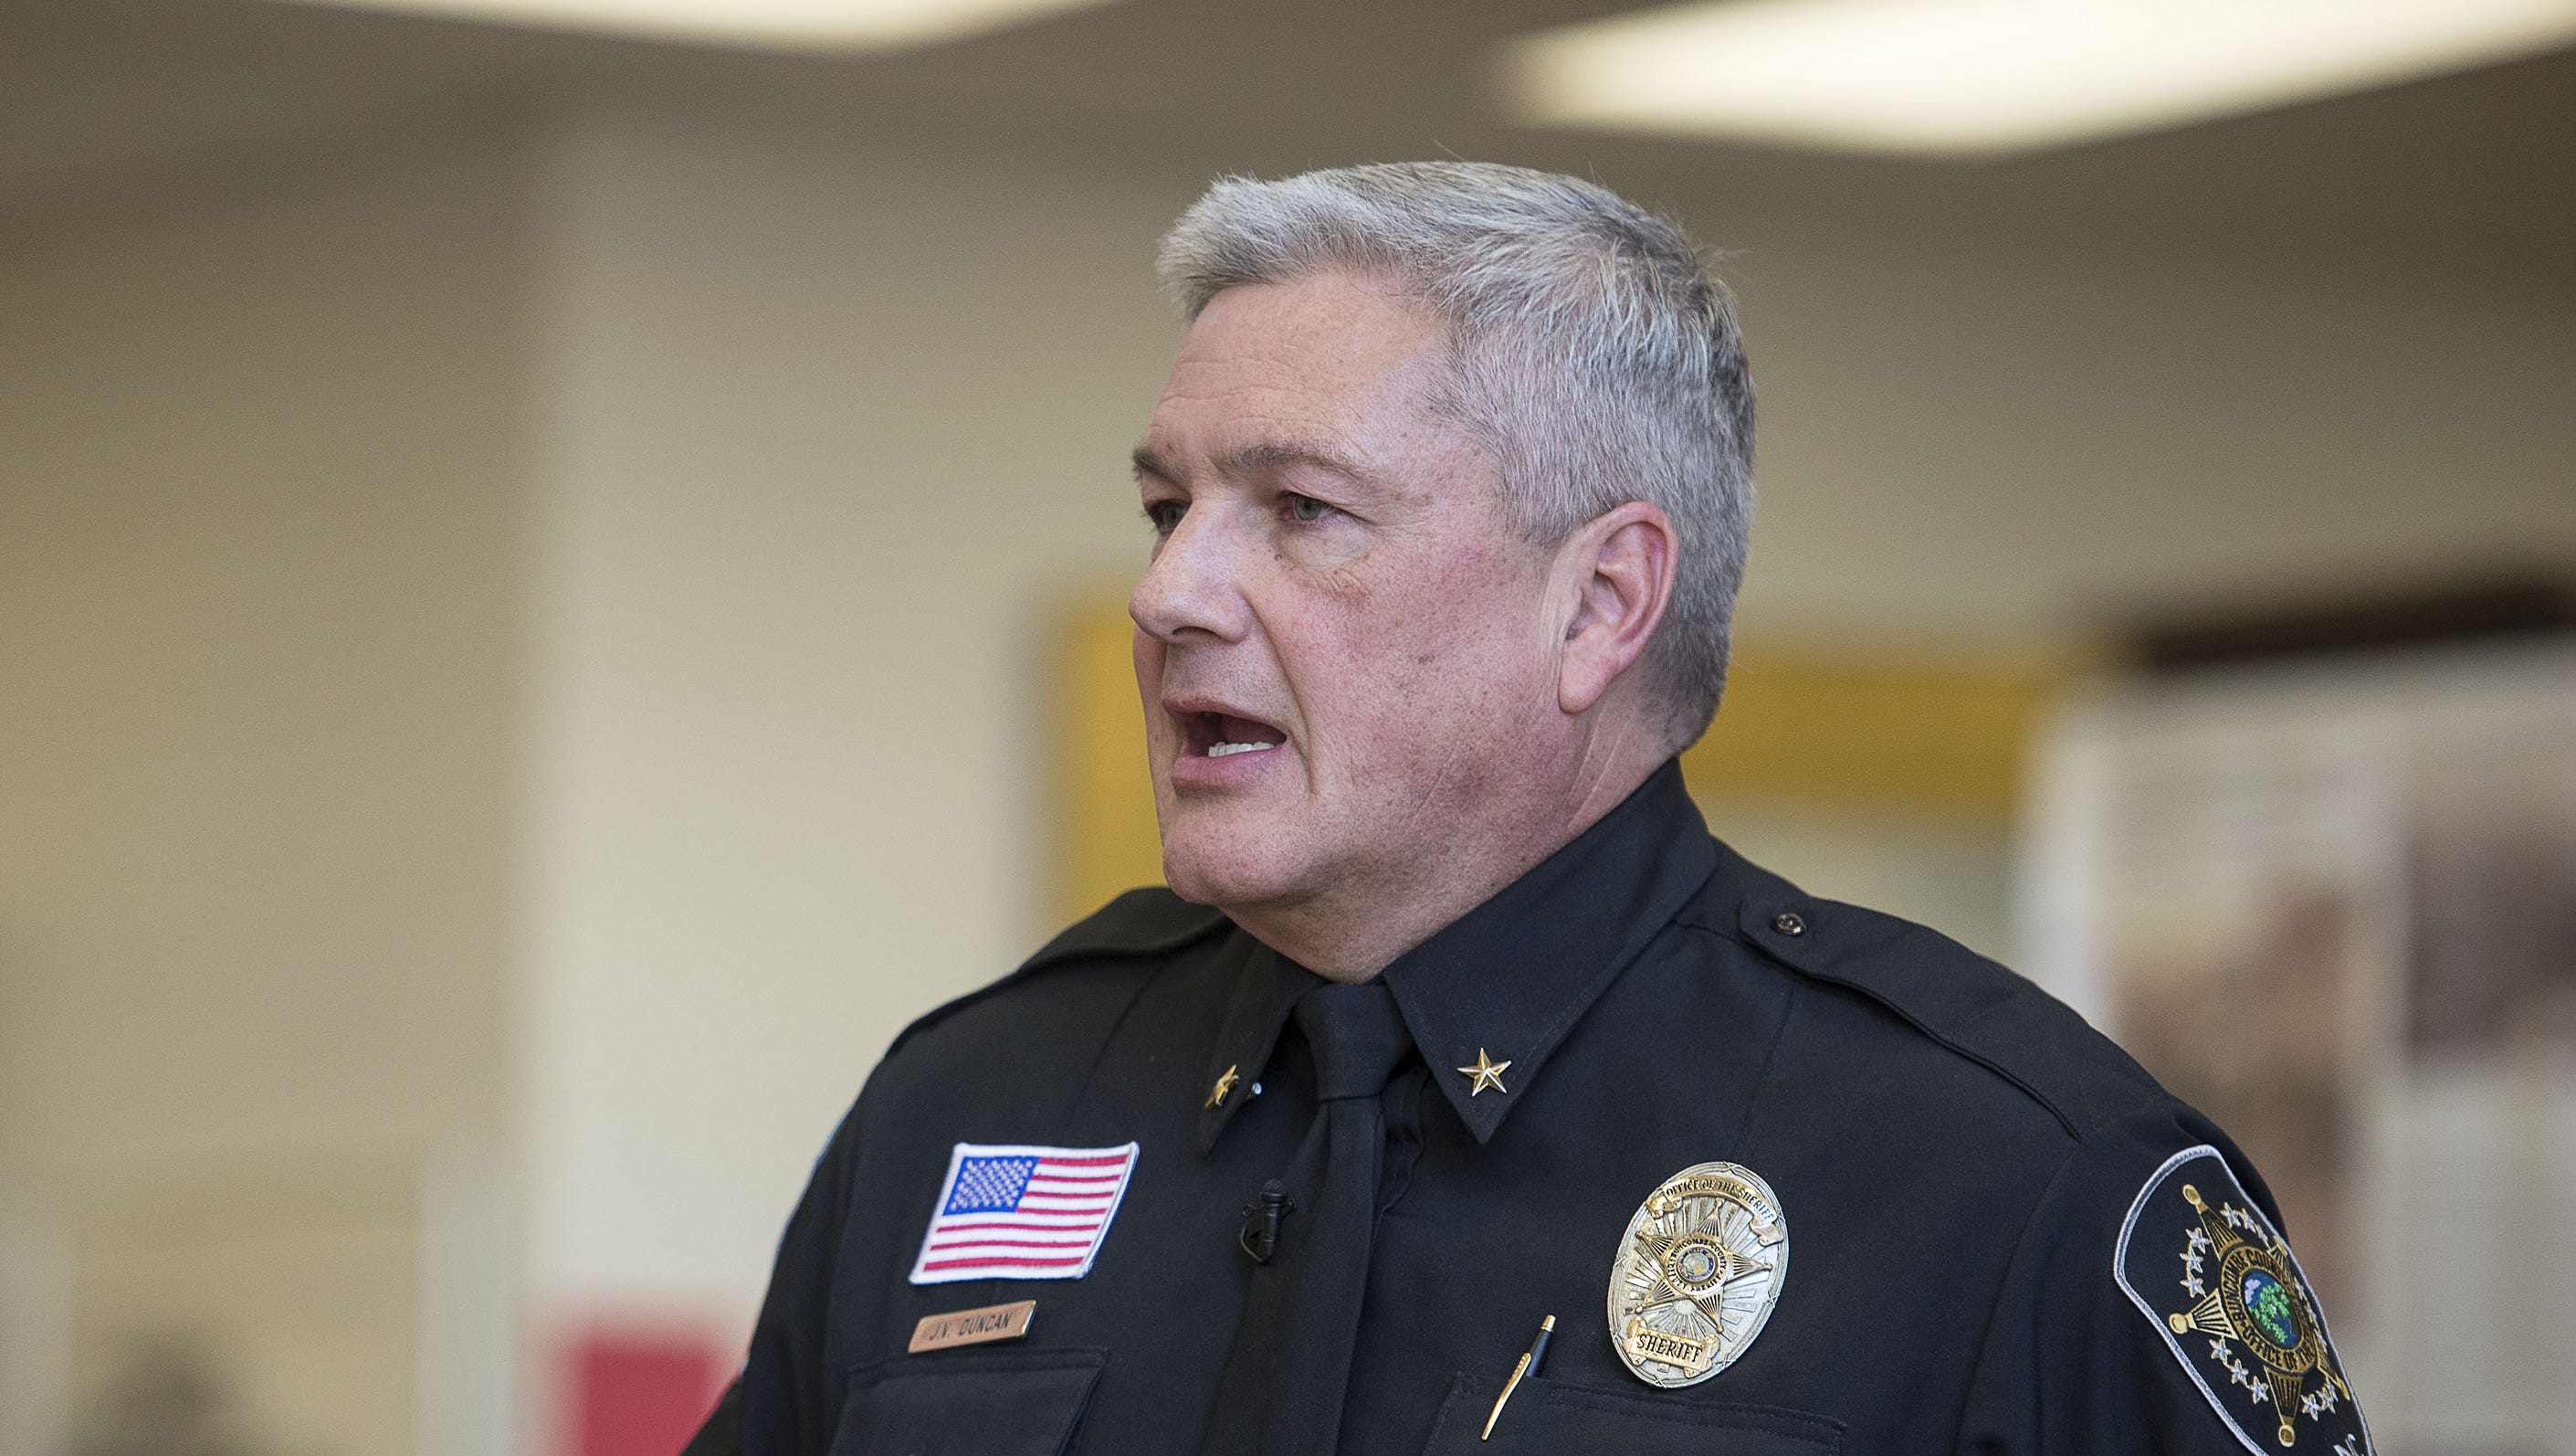 Buncombe Sheriff Van Duncan announces plans to retire